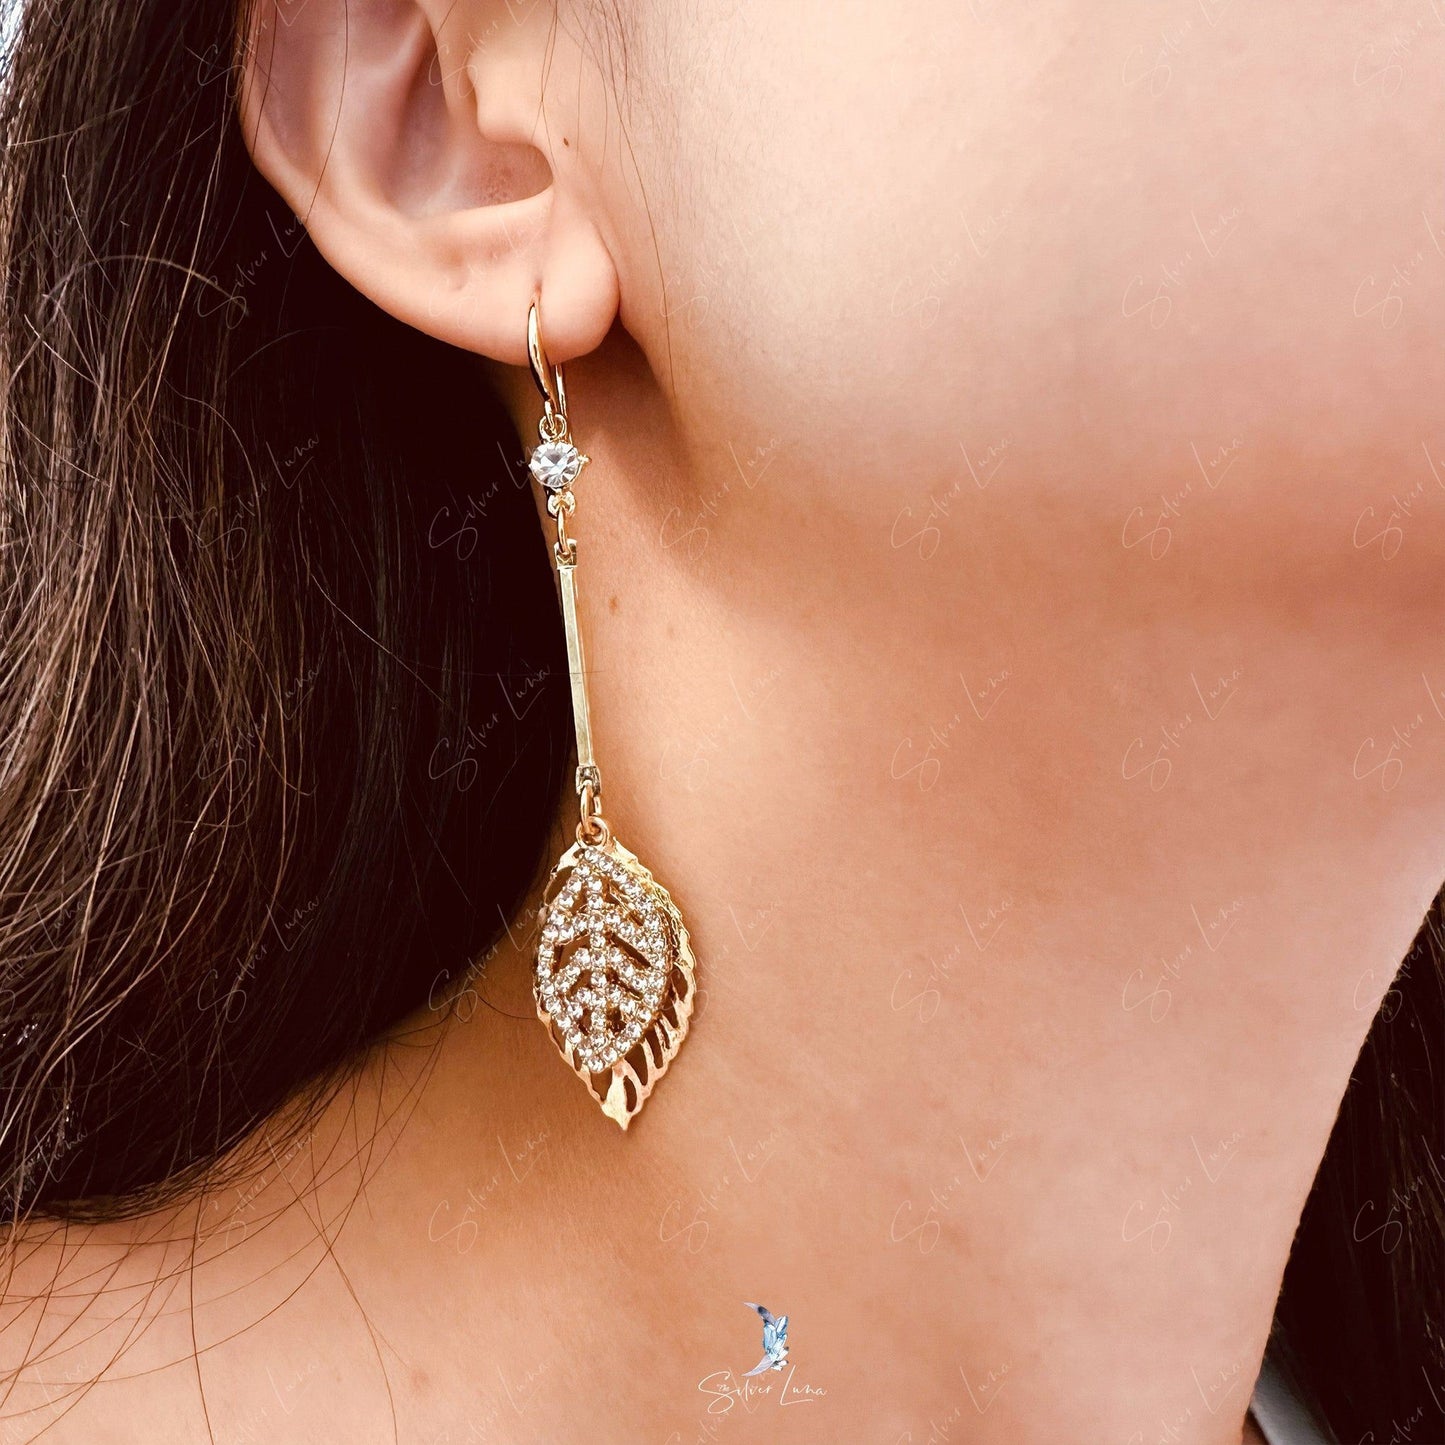 Fashion dangle drop leaf earrings